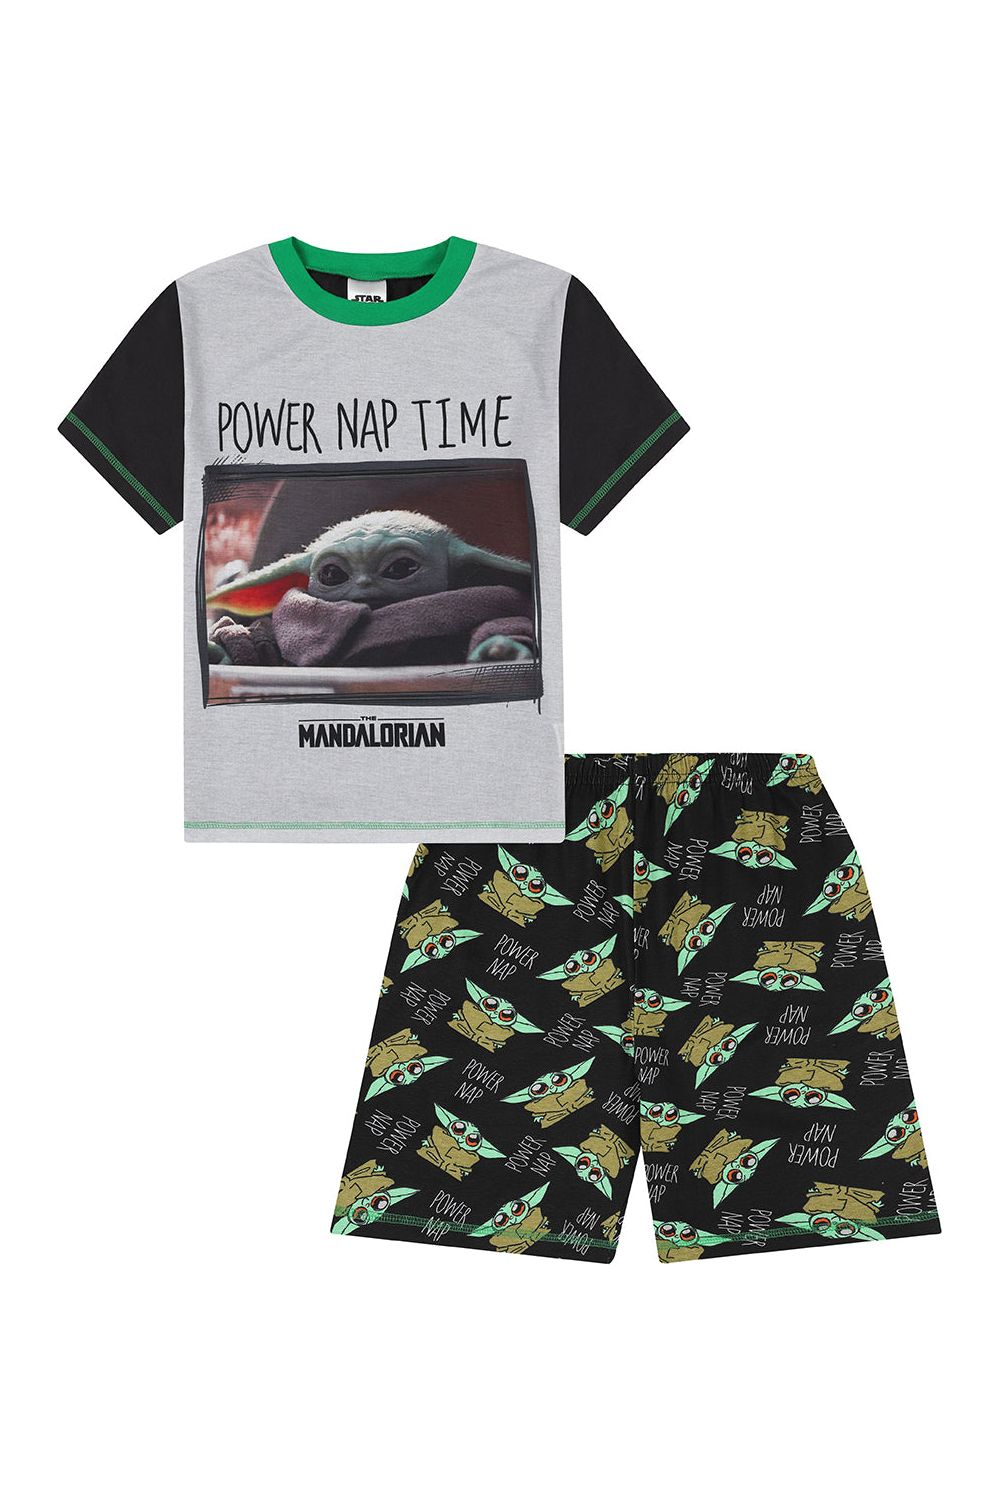 Boys' Star Wars Baby Yoda The Mandalorian Power Nap Short Pyjama Set - Pyjamas.com